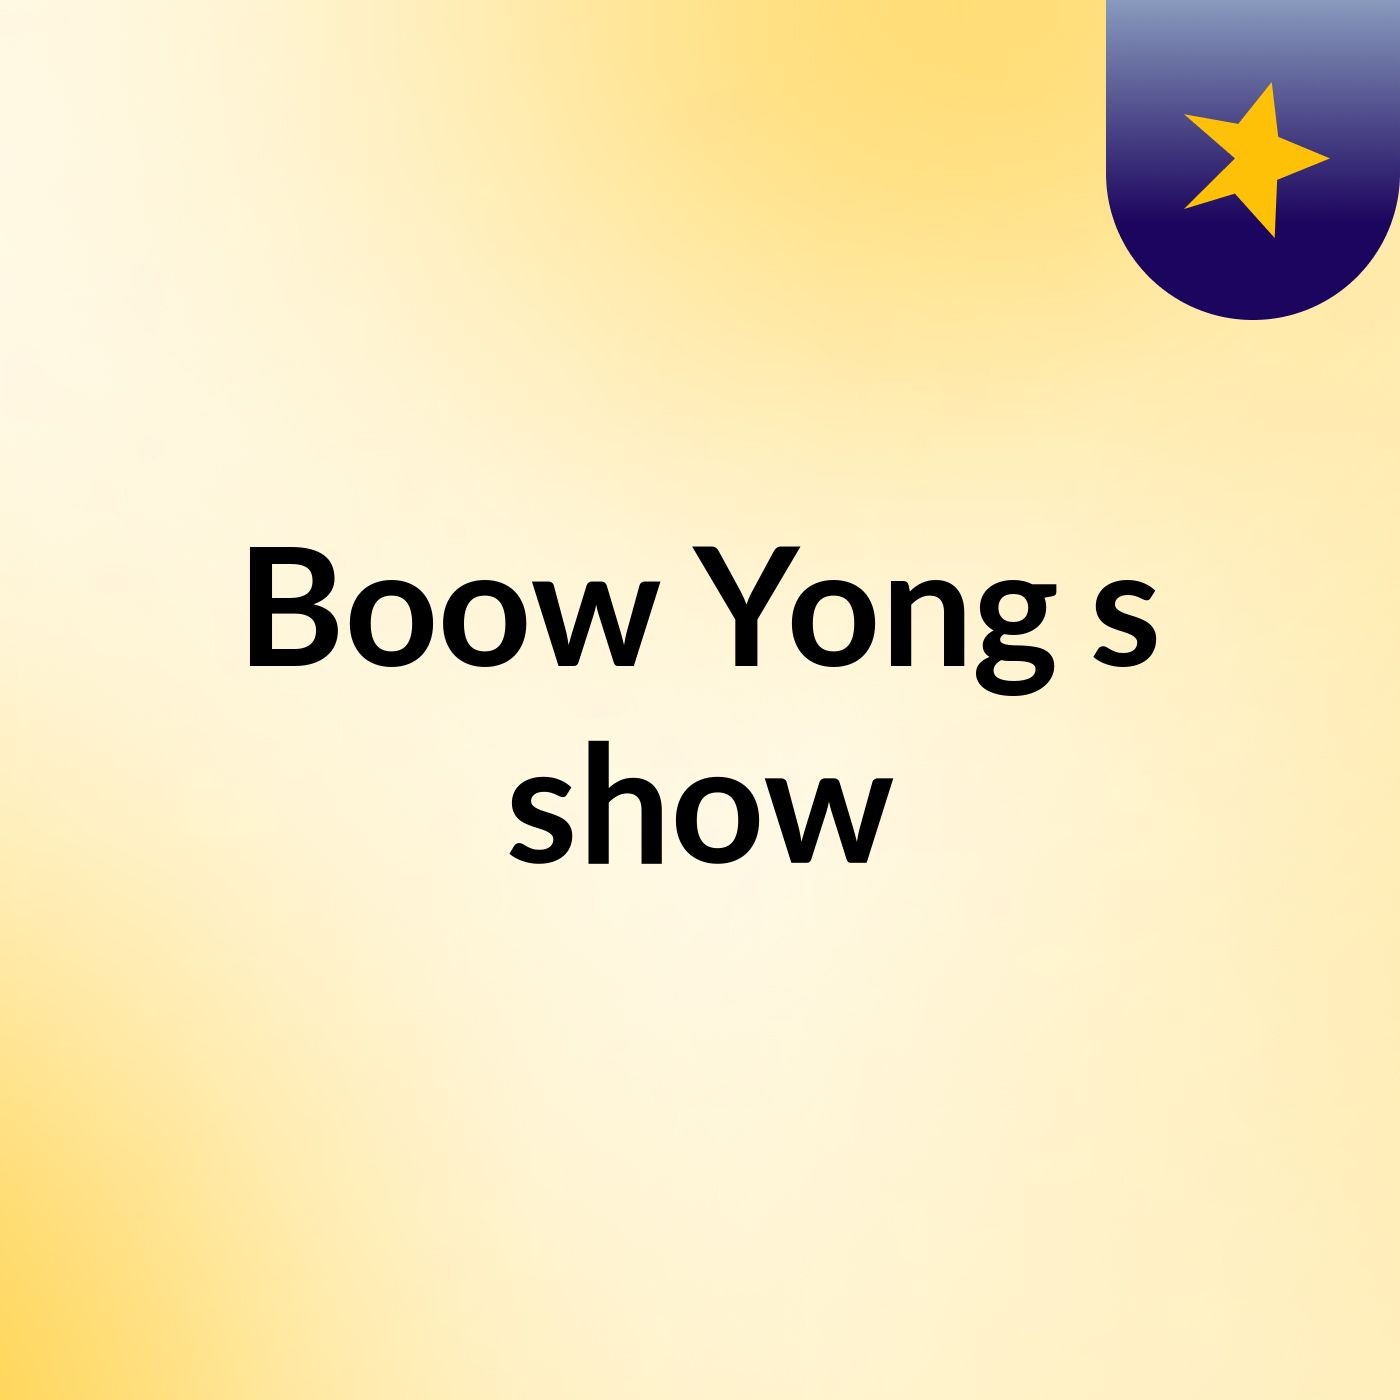 Boow Yong's show